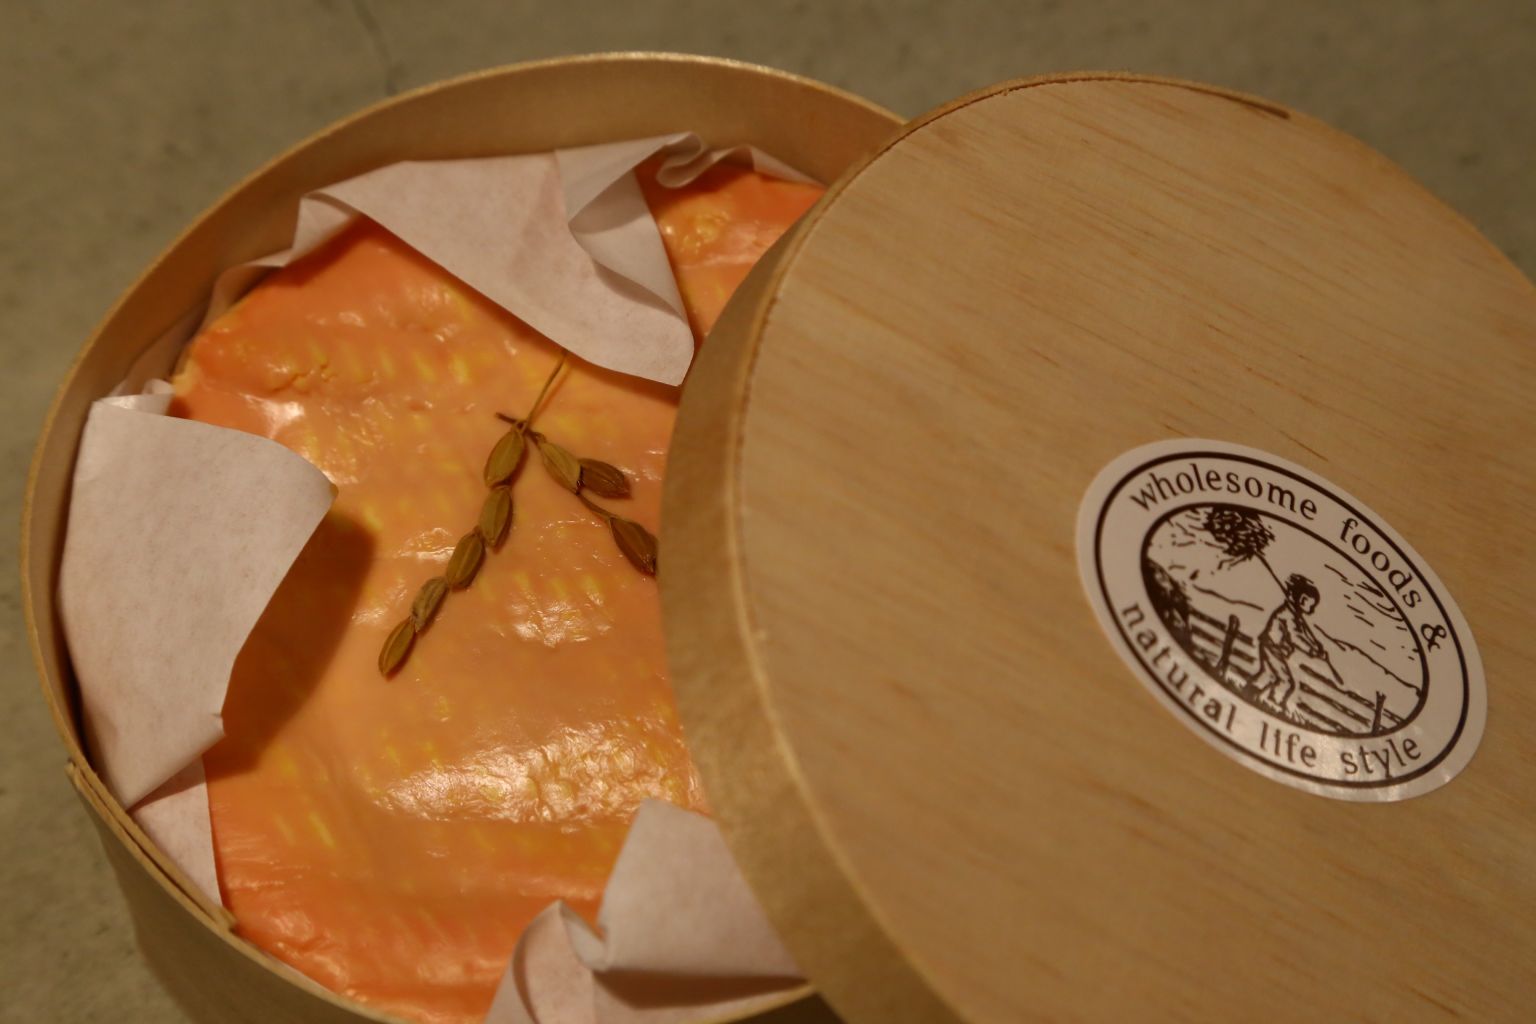 Kyodo-Gakusha Cheese - アペロ ワインバー / apéro WINEBAR - vins et petits plats français - Minami Aoyama Tokyo